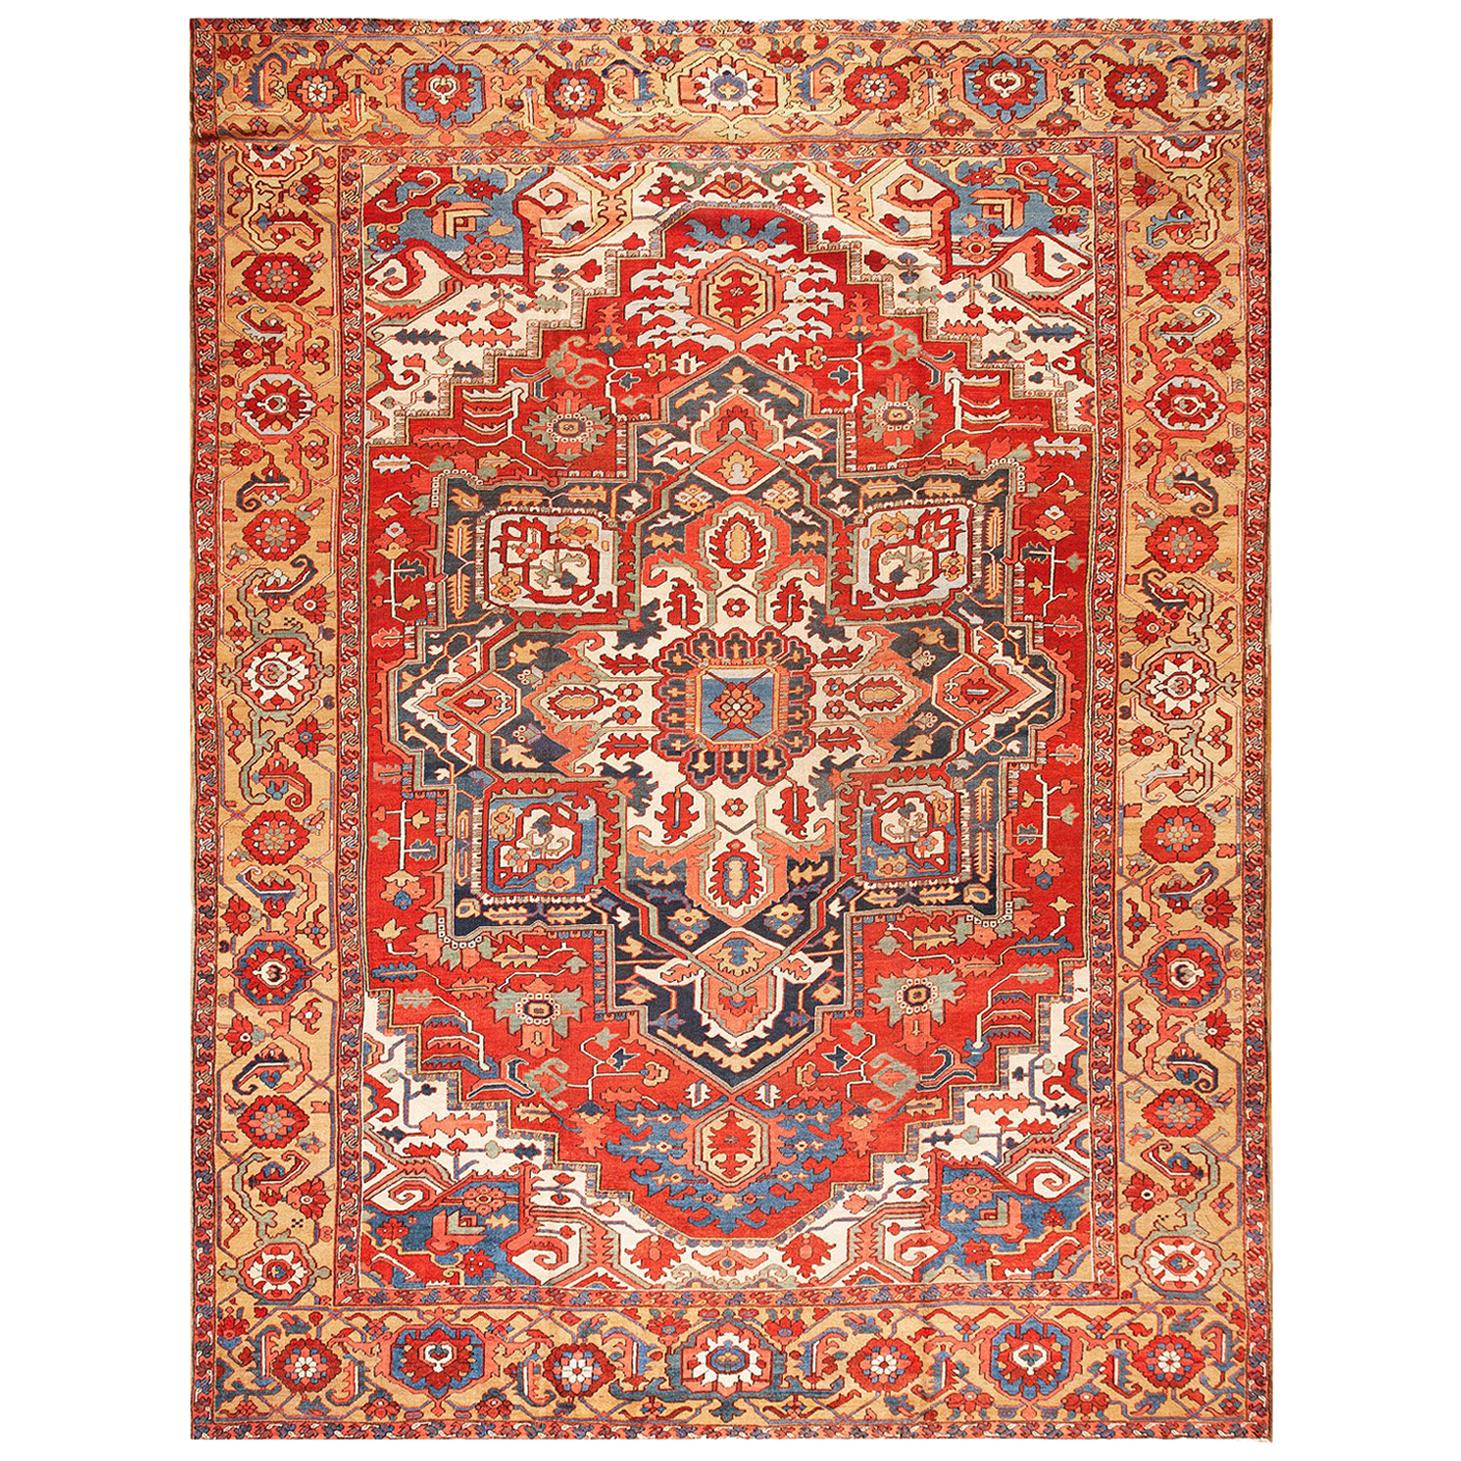 Late 19th Century Persian Heriz Carpet ( 11'6" x 15'8" - 350 x 477 )